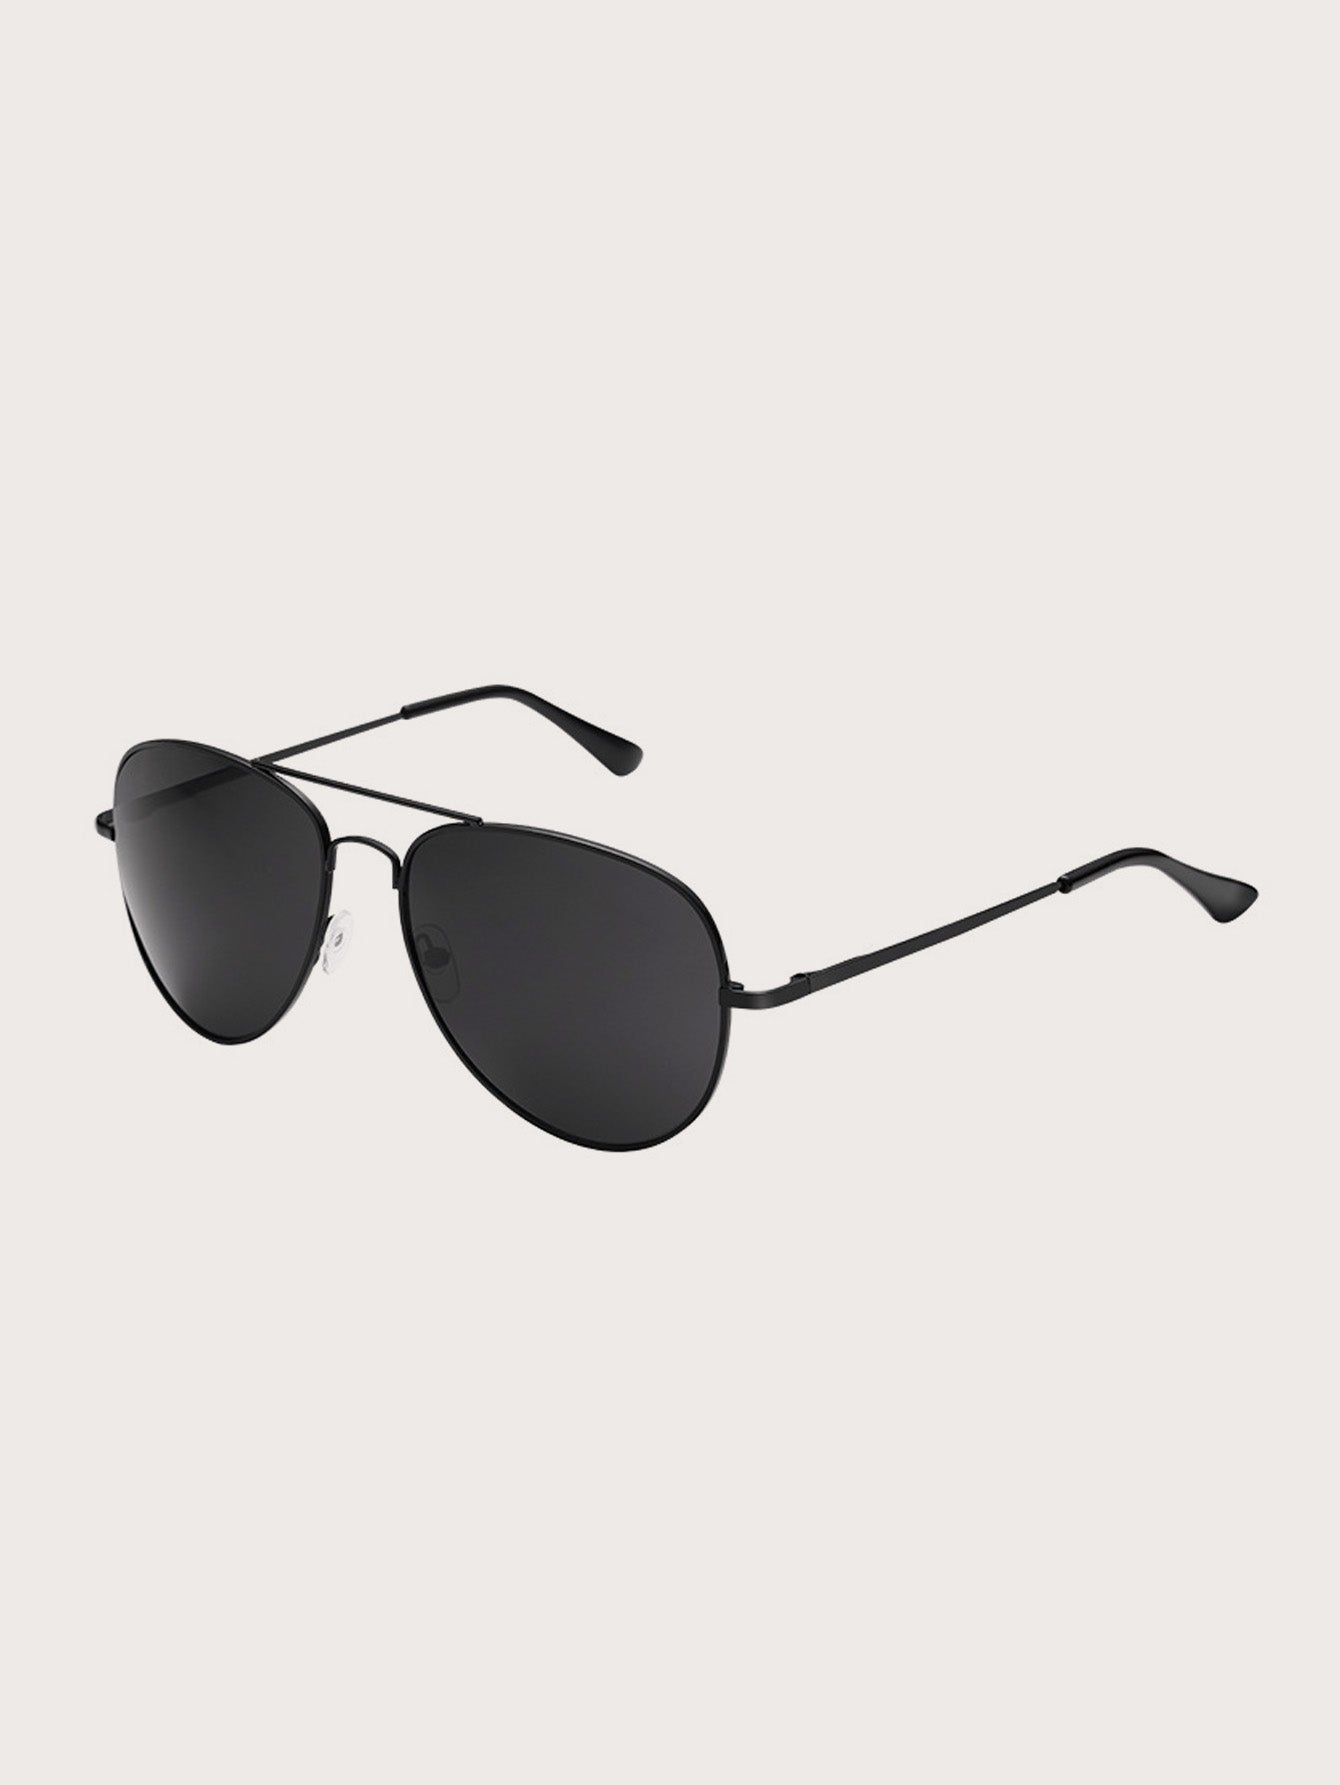 Shiril Sunglasses ™️